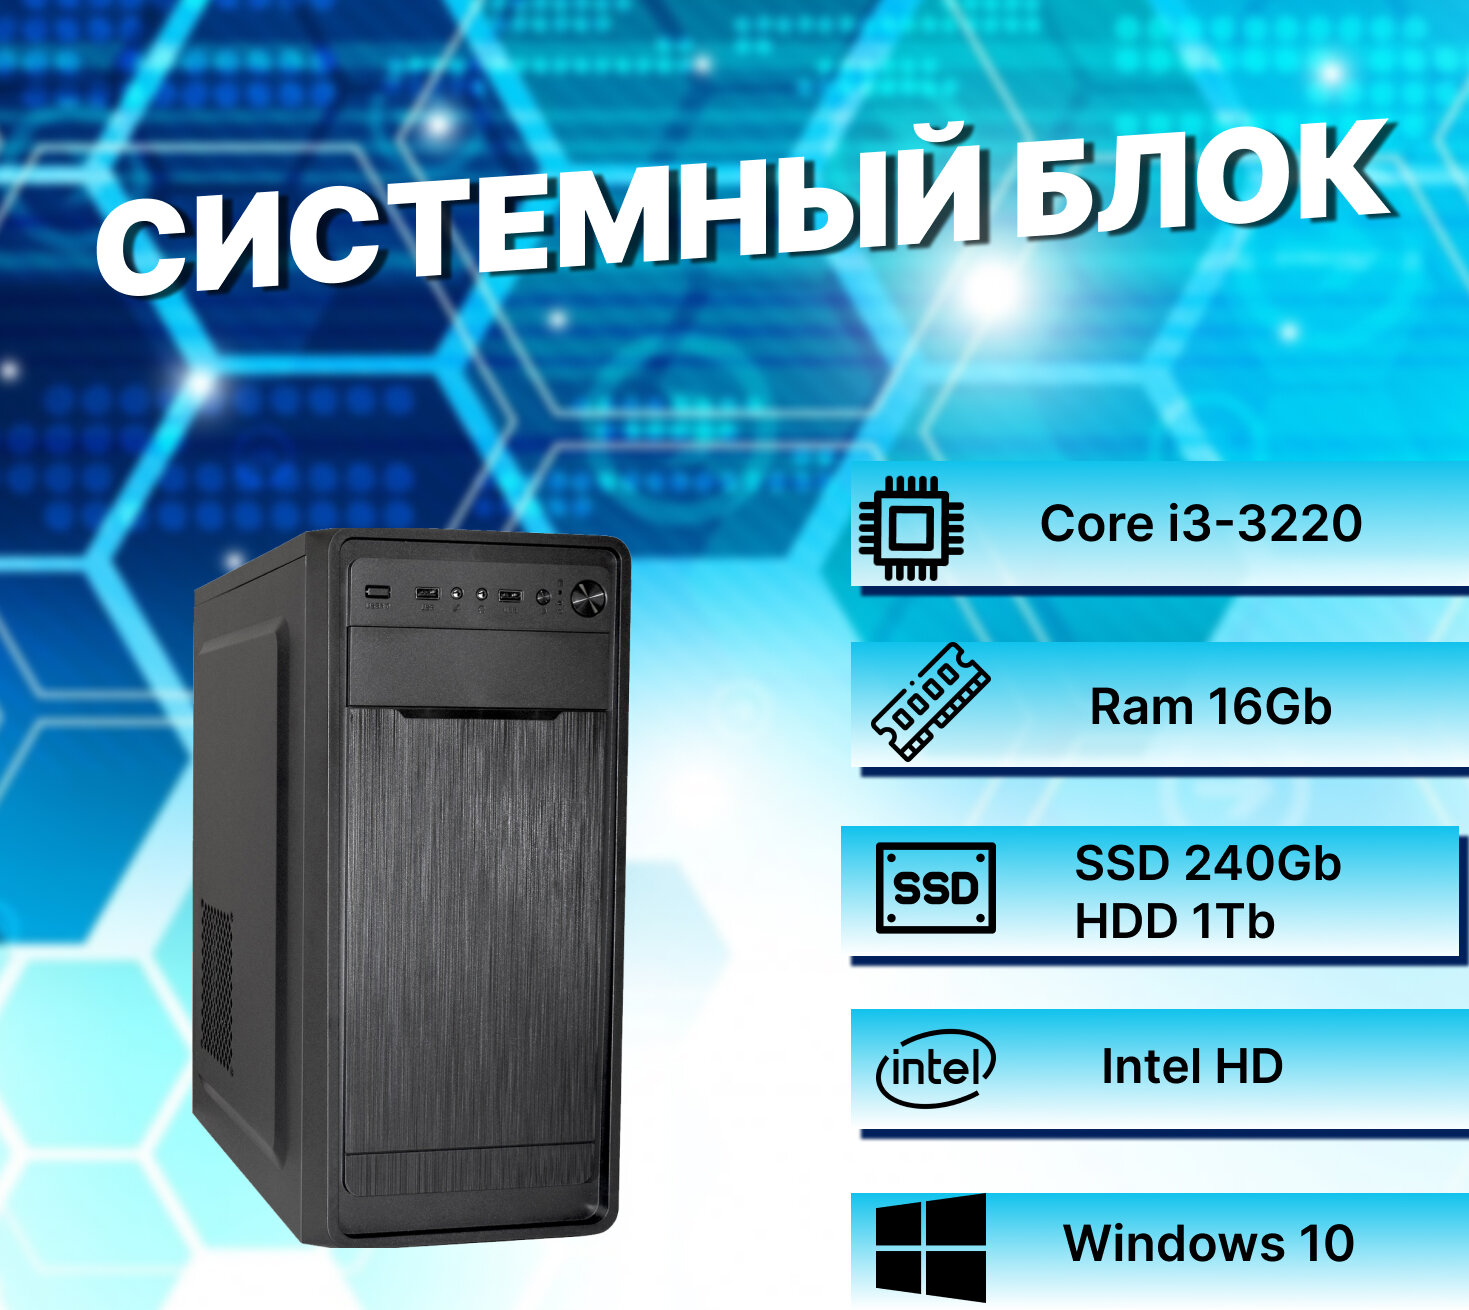 Системный блок Intel Core I3-3220 (3.4ГГц)/ RAM 16Gb/ SSD 240Gb/ HDD 1Tb/ Intel HD/ Windows 10 Pro